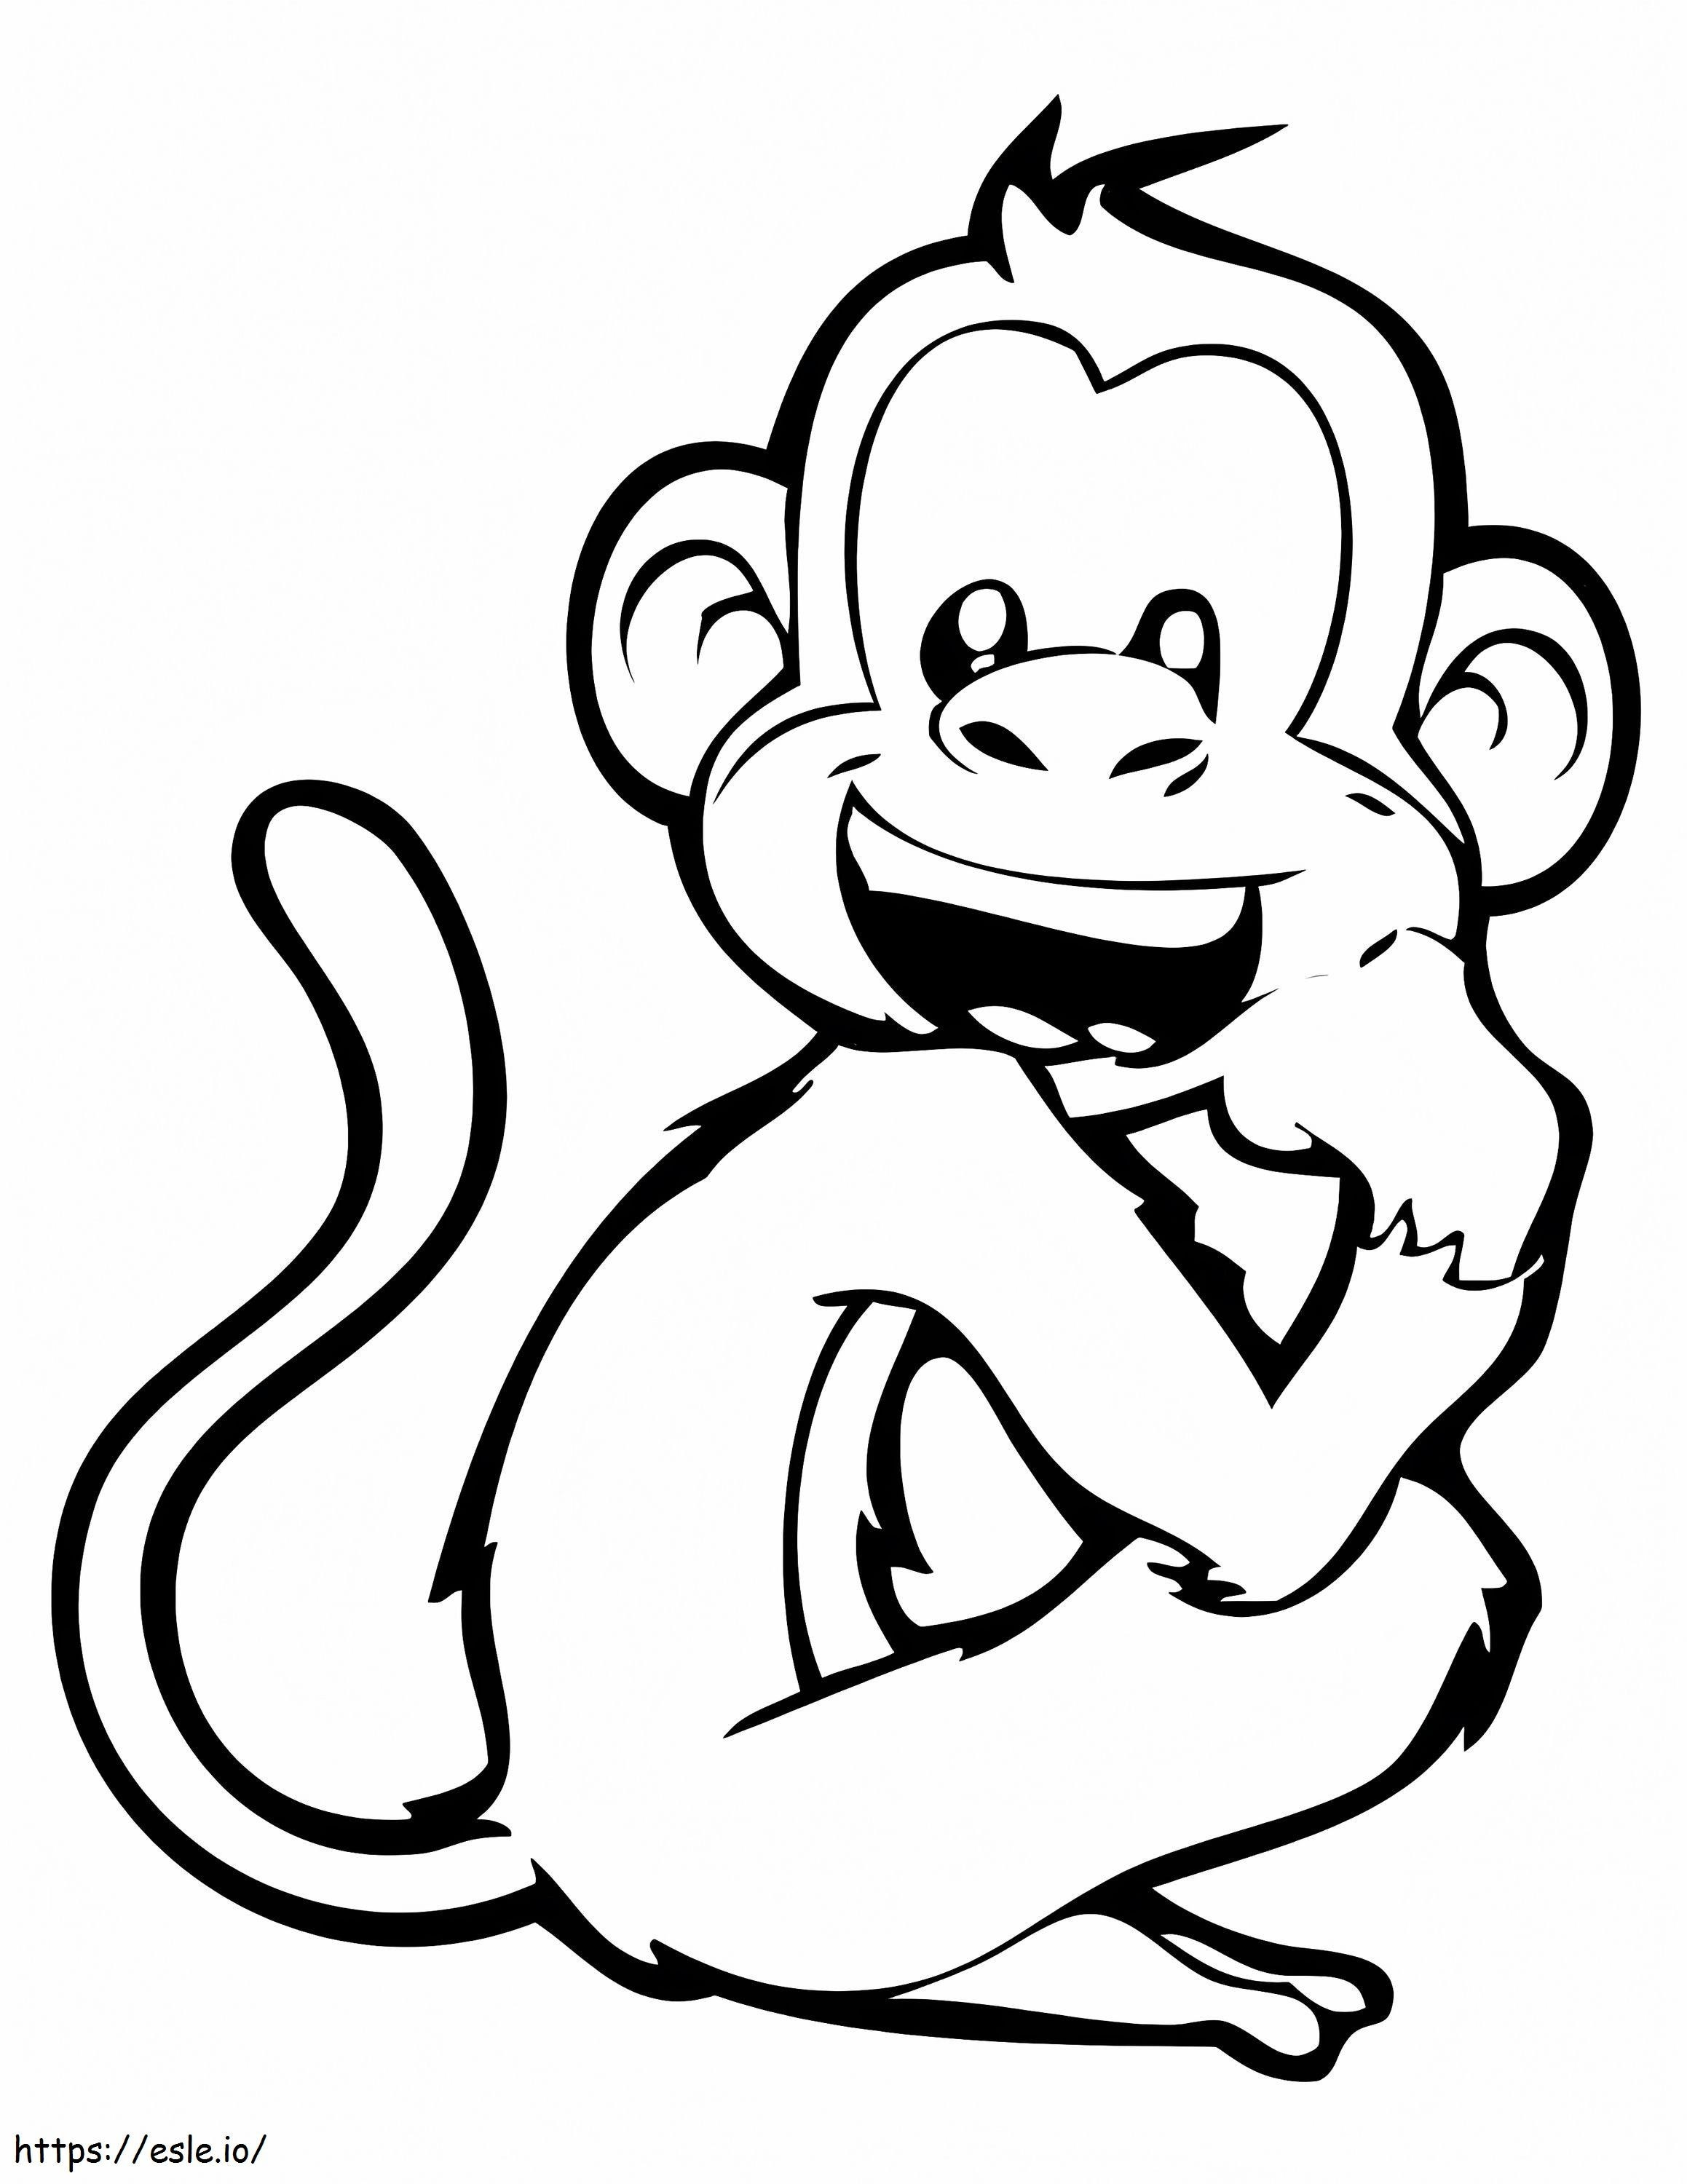 Macaco para imprimir para colorir